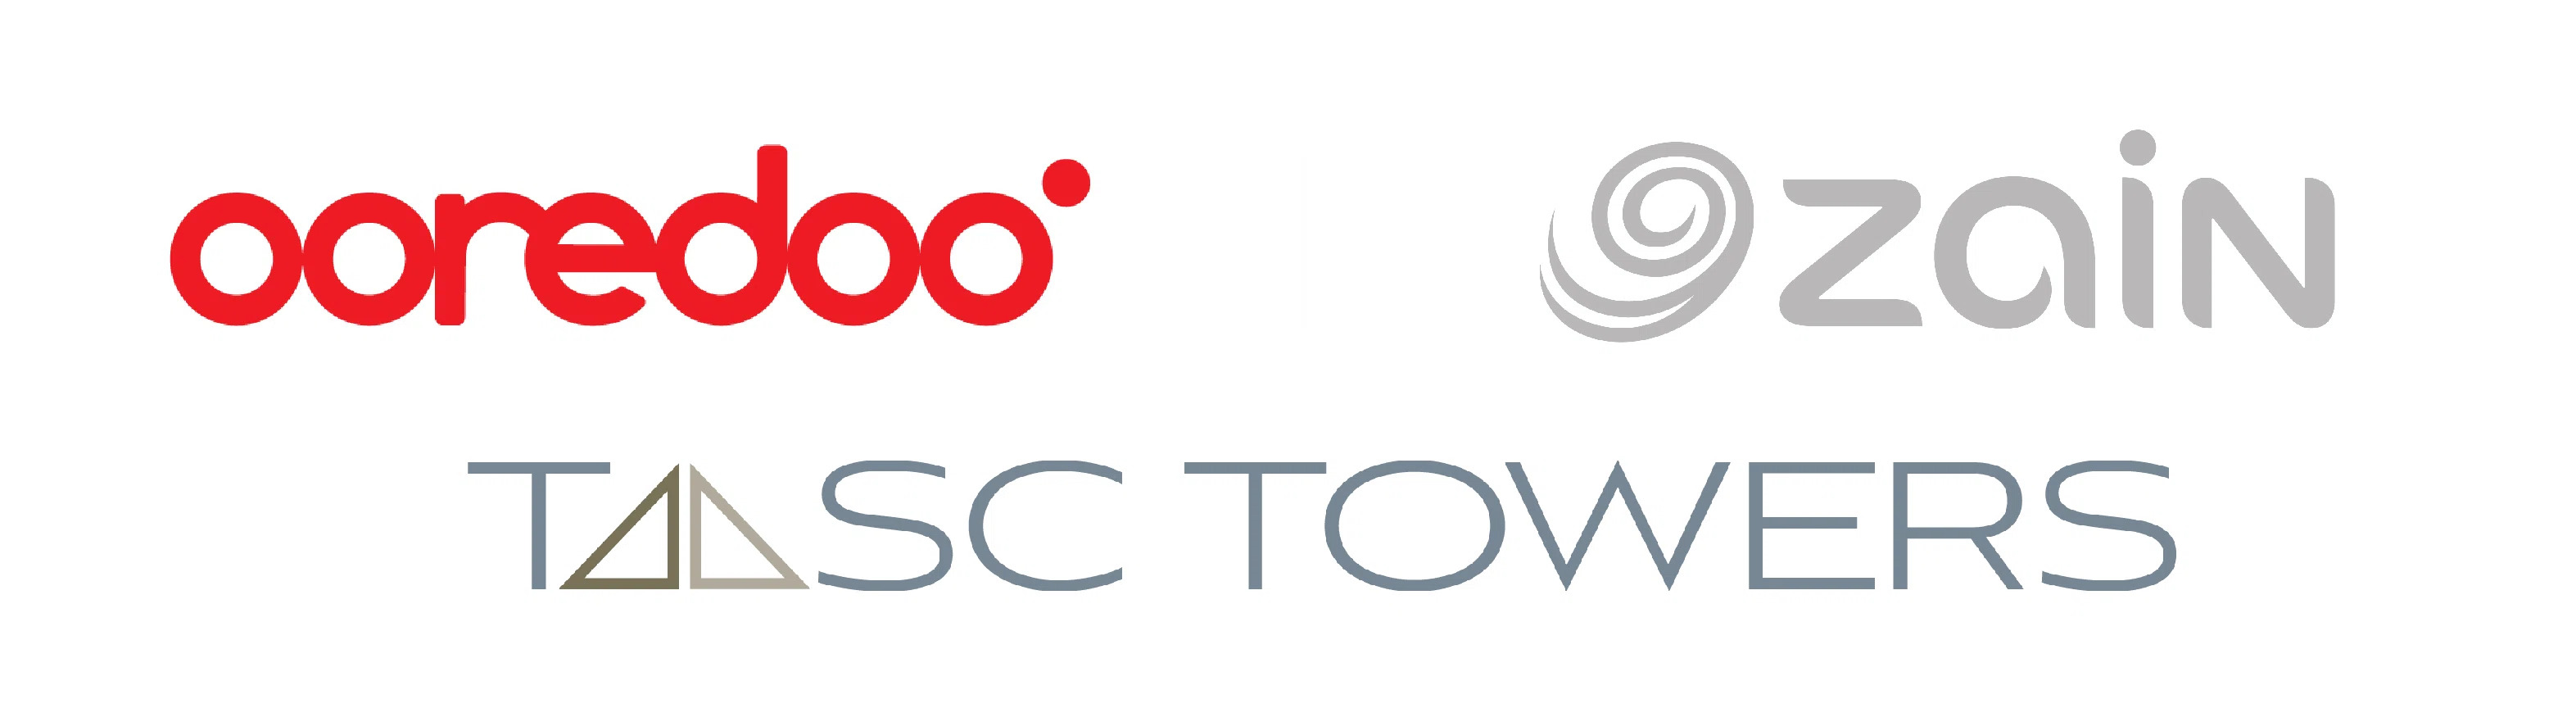 Ooredoo / Zain / Tasc Towers Joint Venture